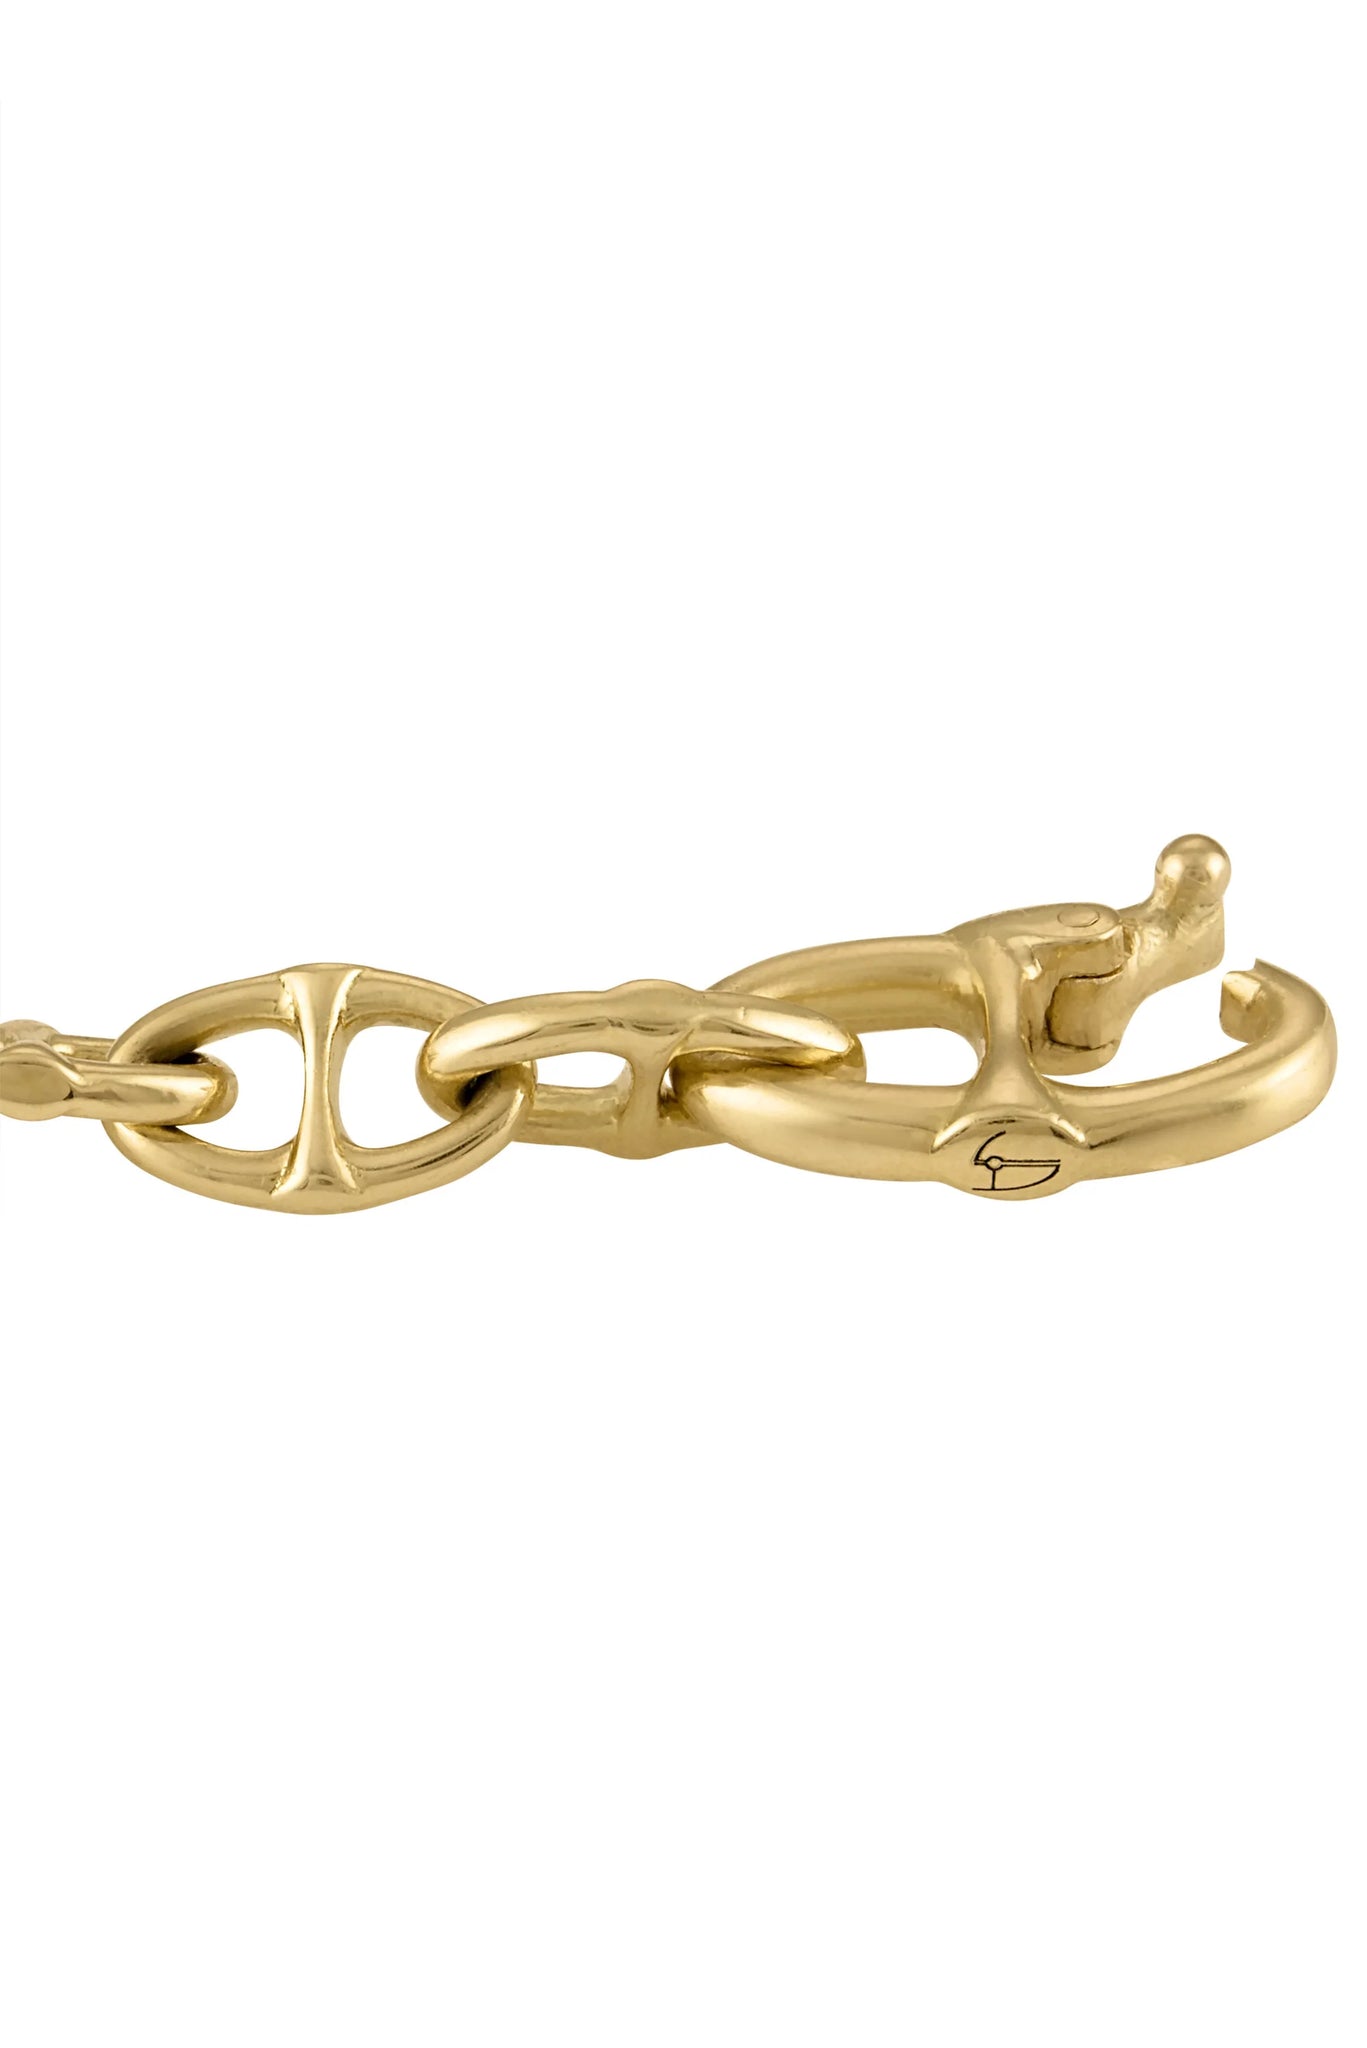 The Small Mariner Link Bracelet